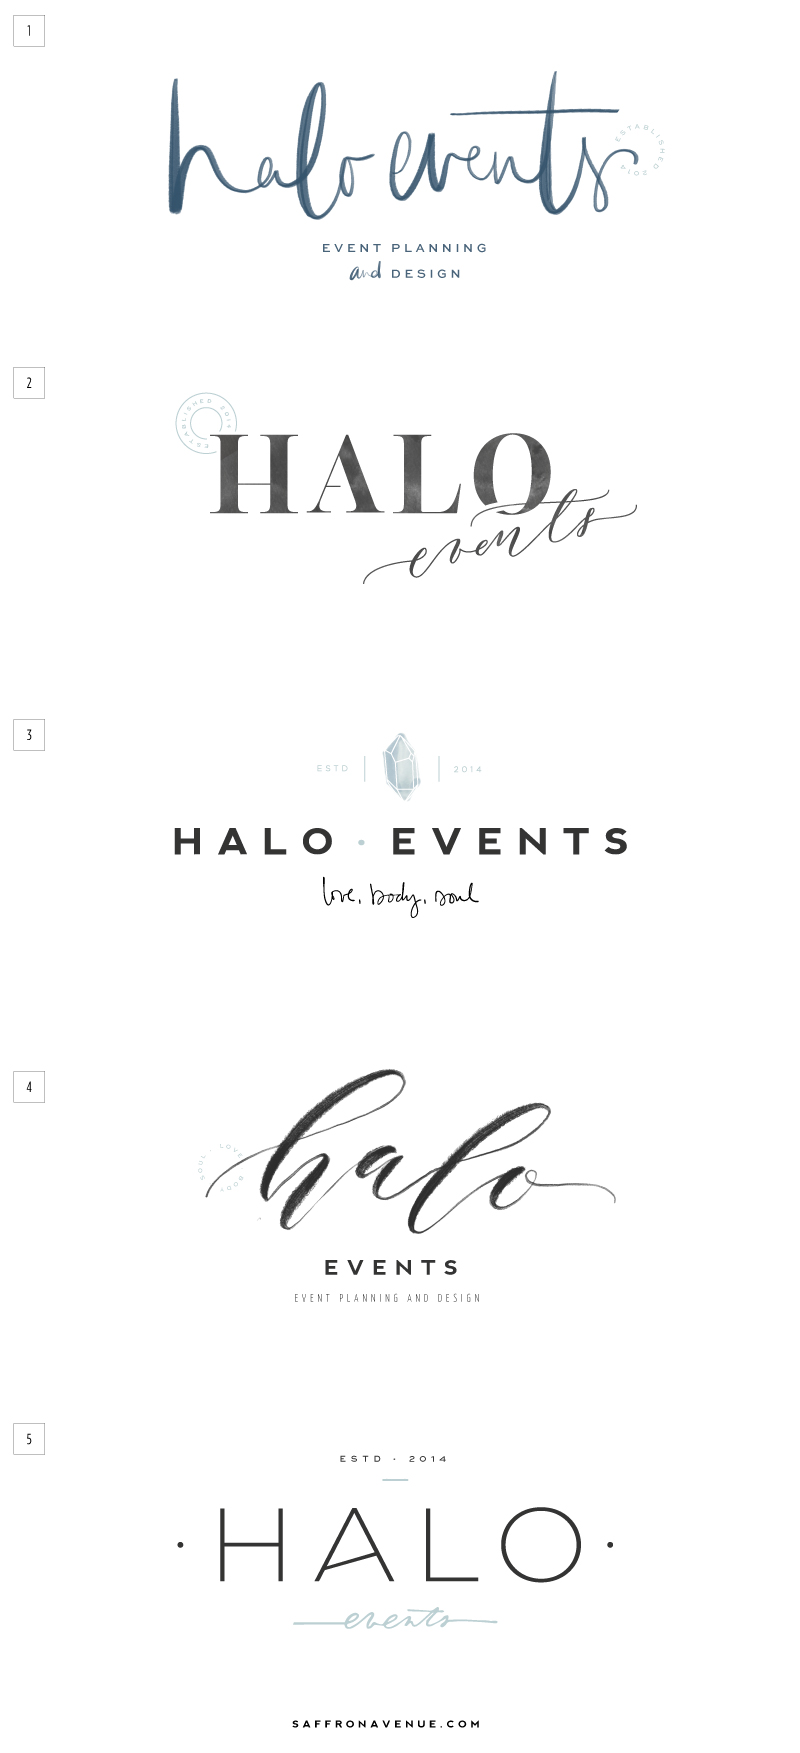 HaloEvents-LogoVariations